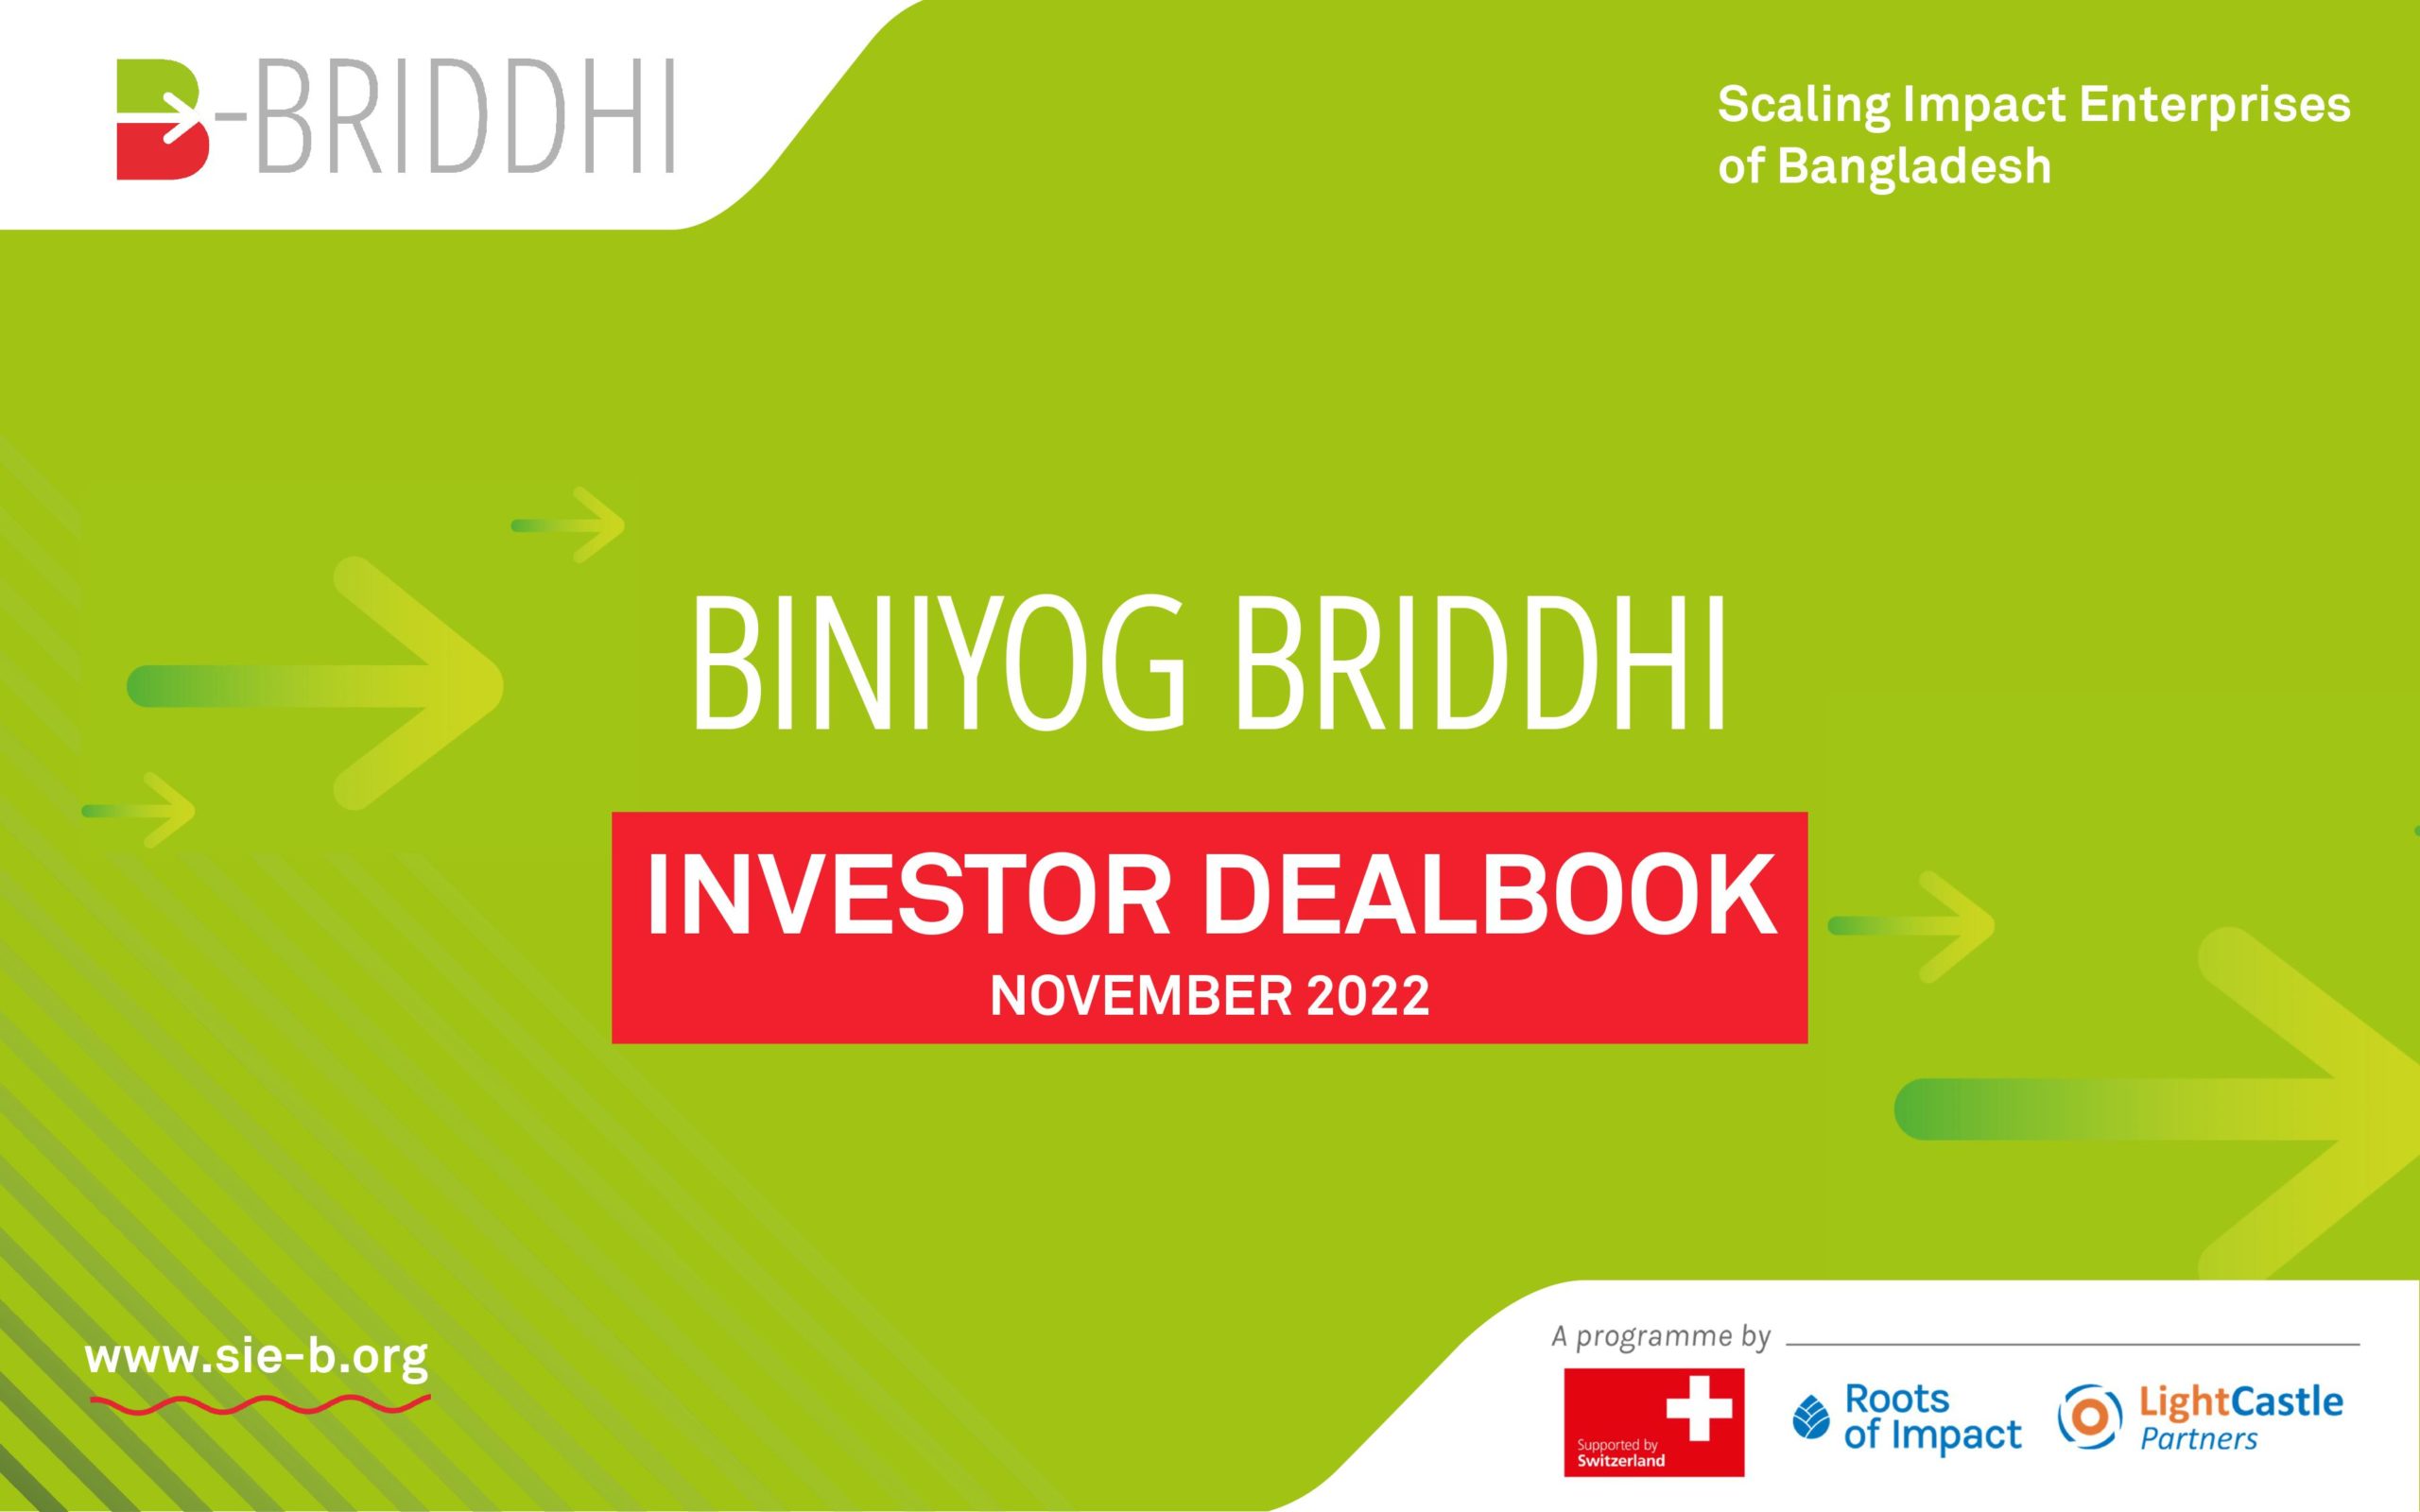 Biniyo Briddhi Investor Dealbook 2022